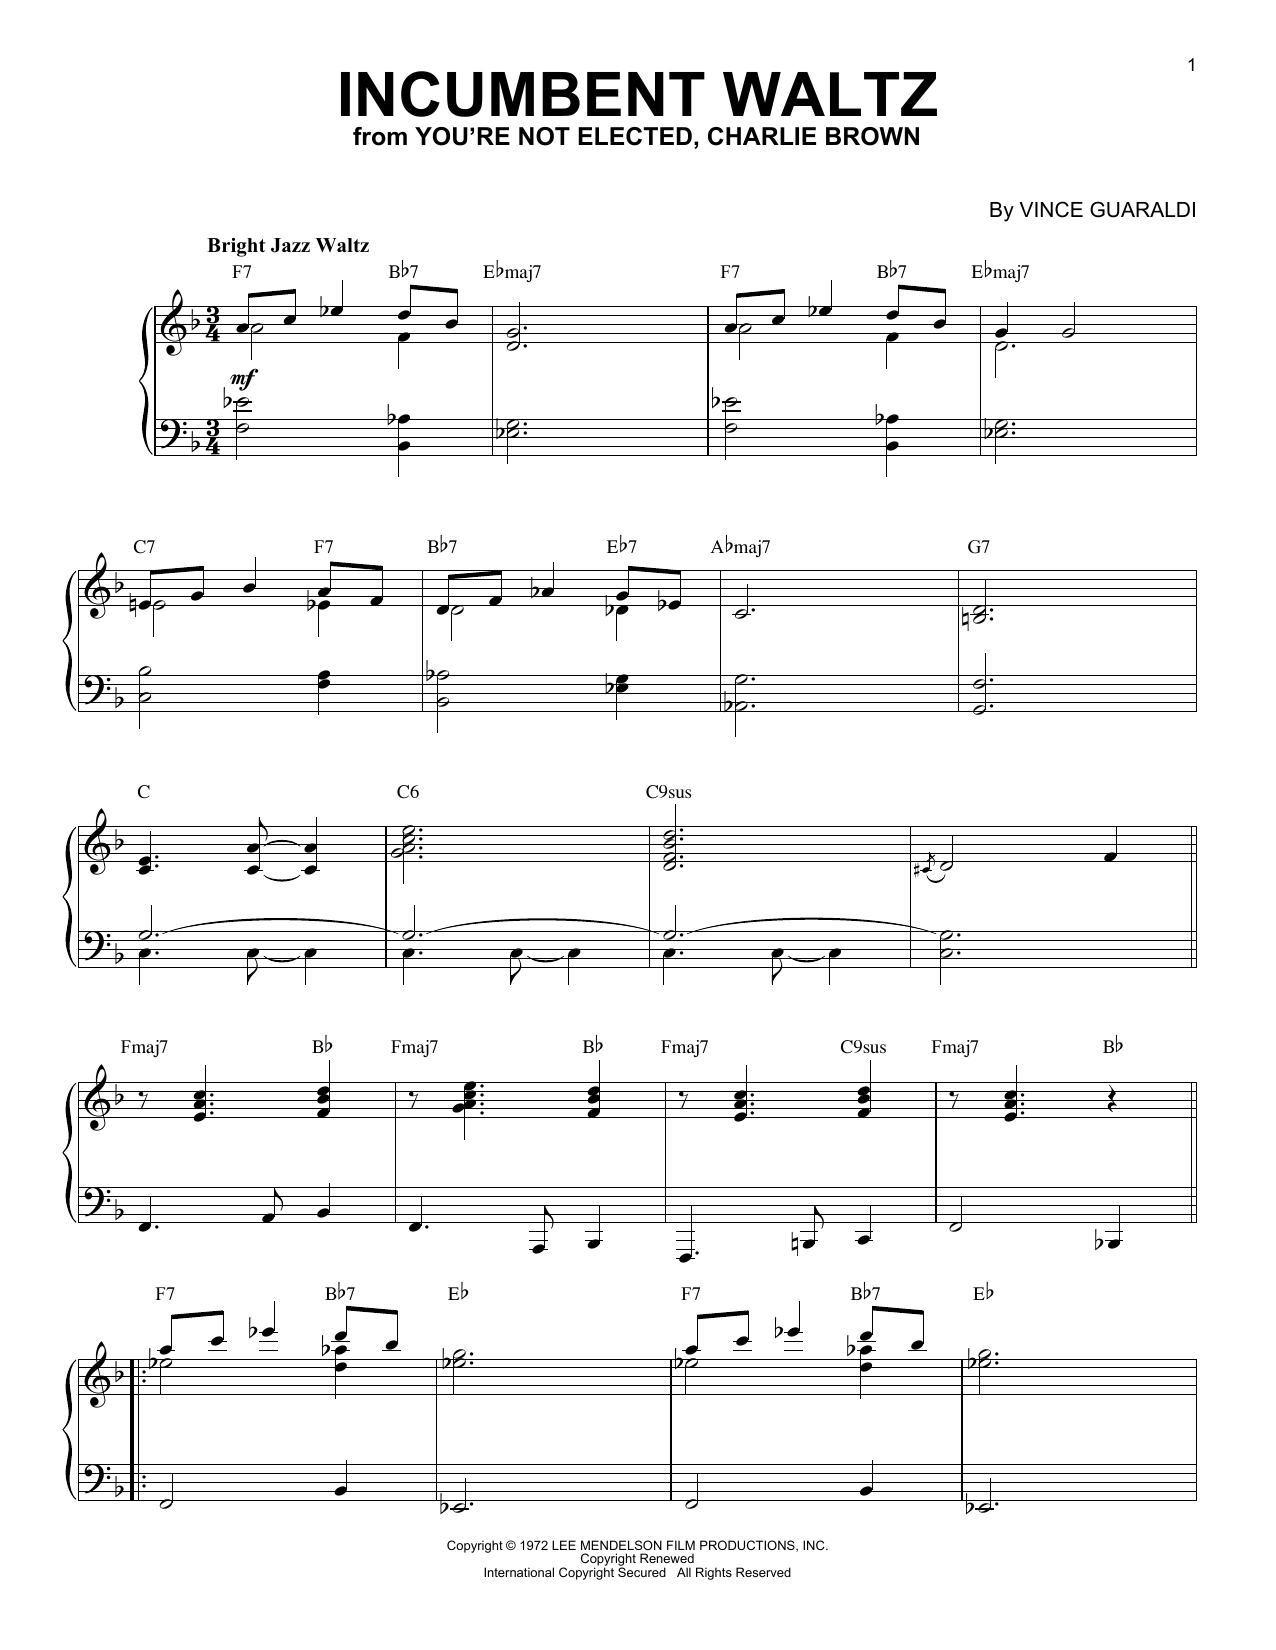 Download Vince Guaraldi Incumbent Waltz (from You're Not Electe Sheet Music